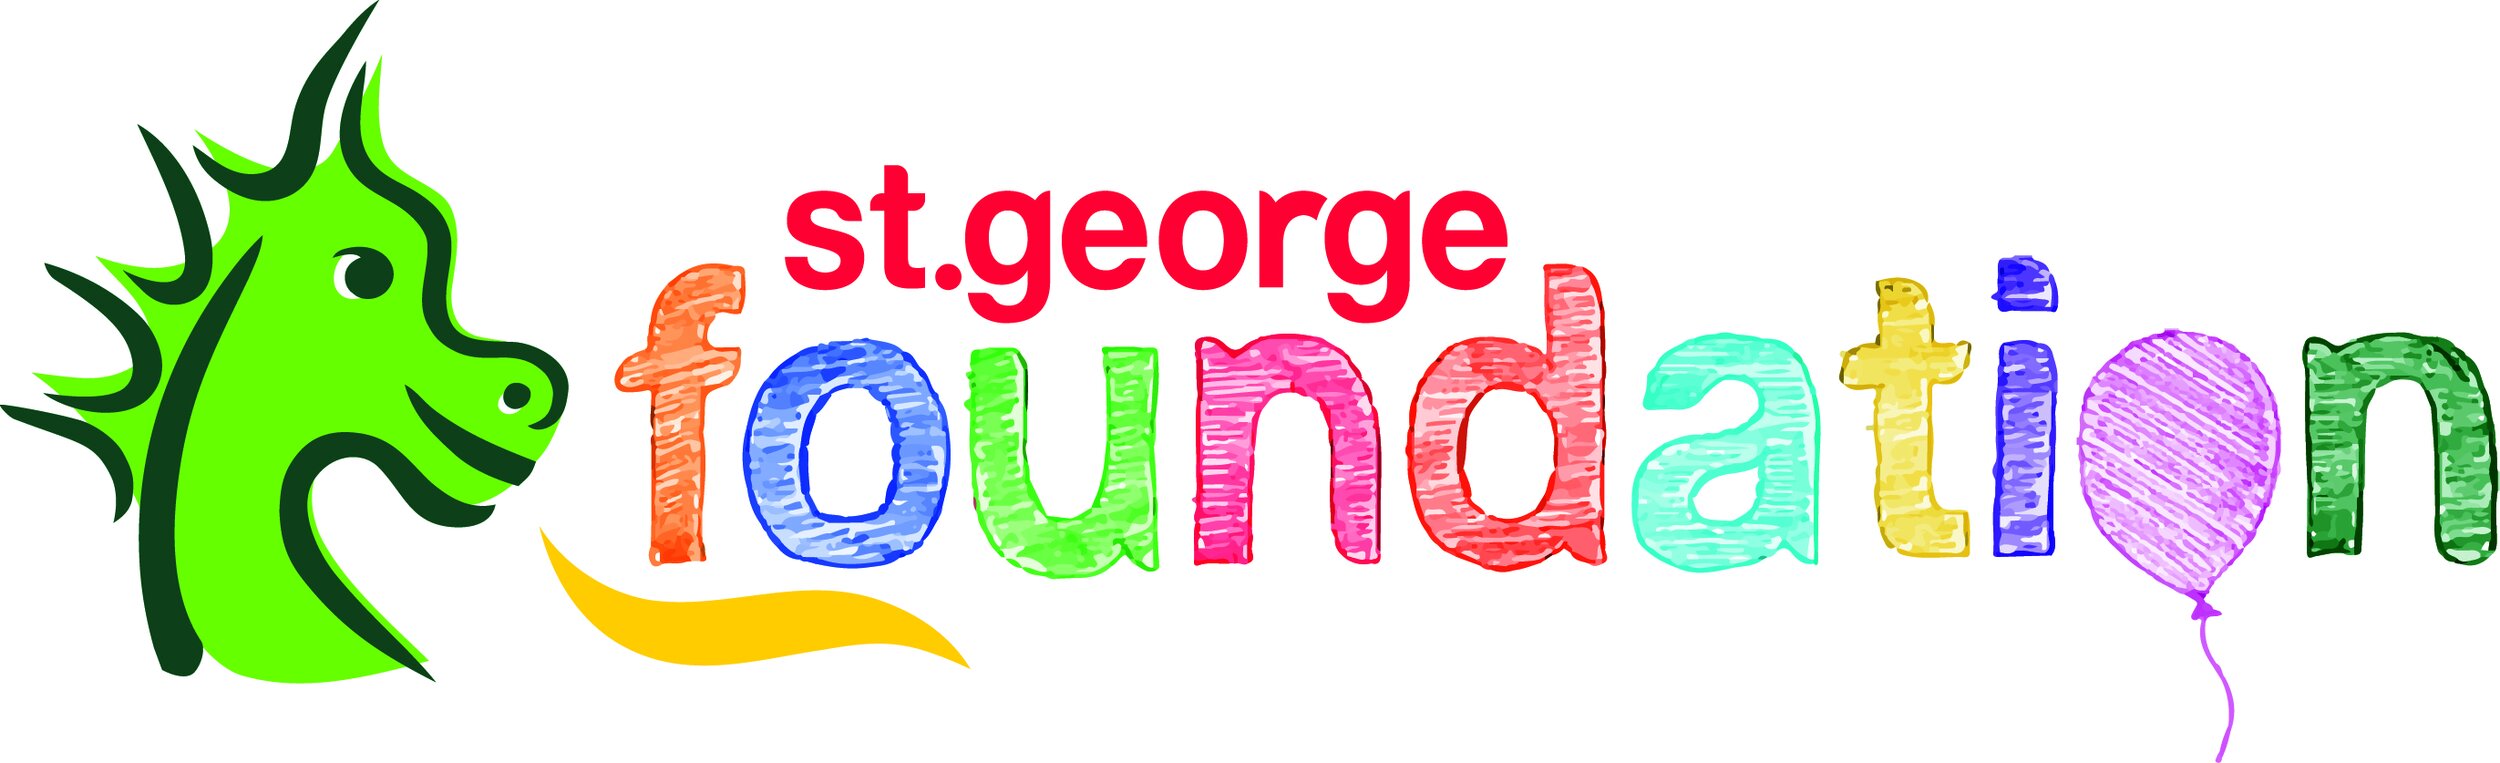 St George Foundation Sketch Colour No Tagline CMYK.jpg